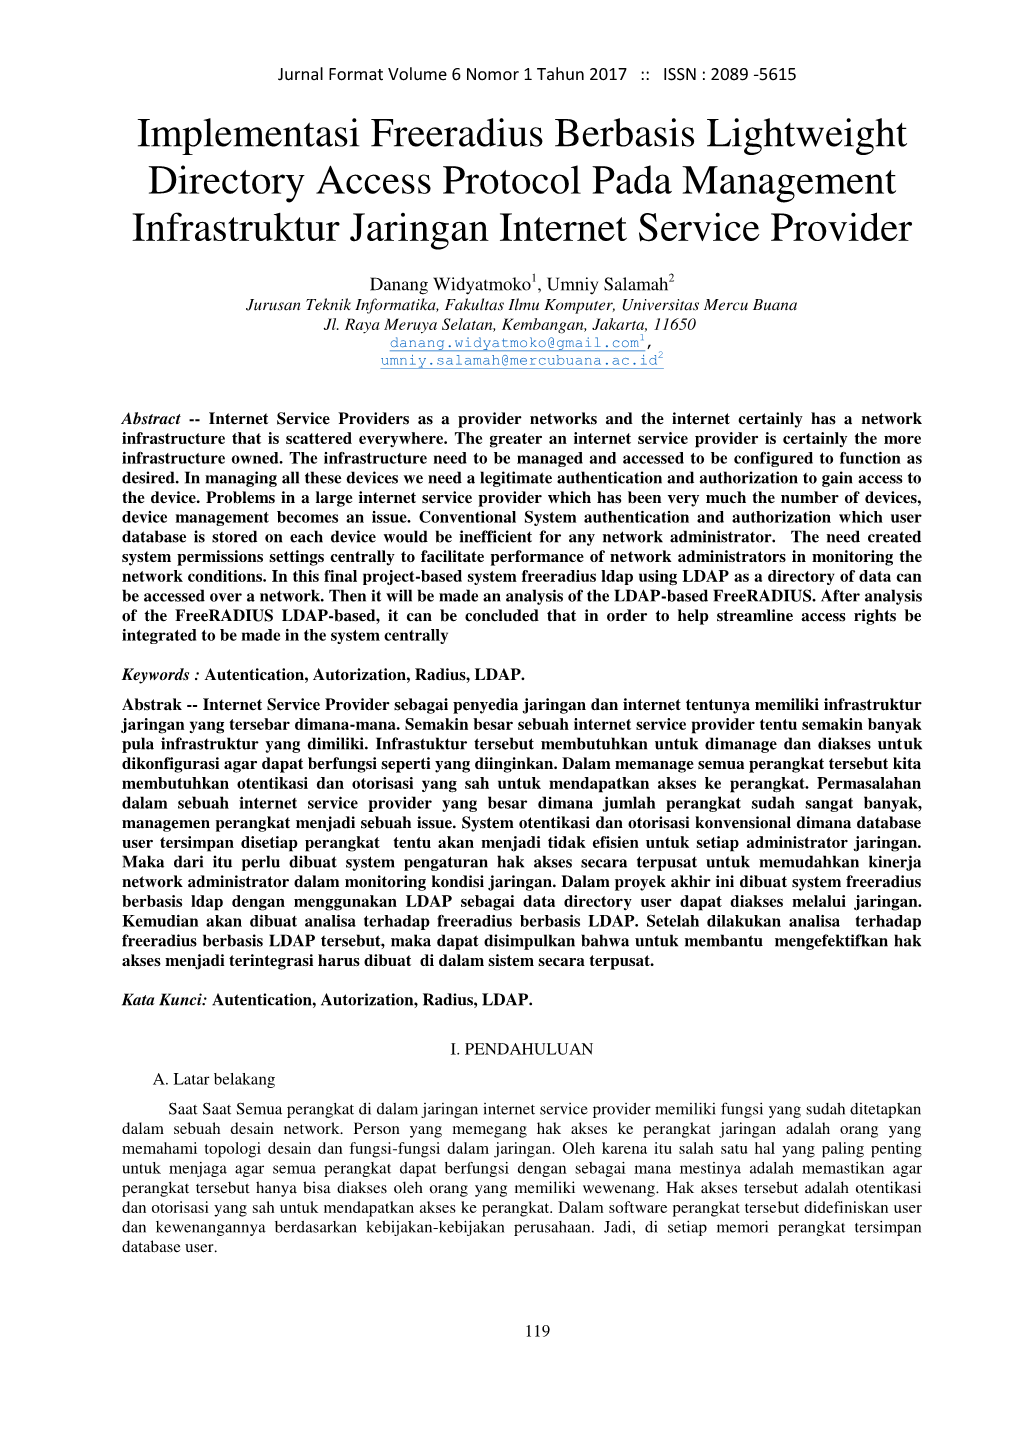 Implementasi Freeradius Berbasis Lightweight Directory Access Protocol Pada Management Infrastruktur Jaringan Internet Service Provider